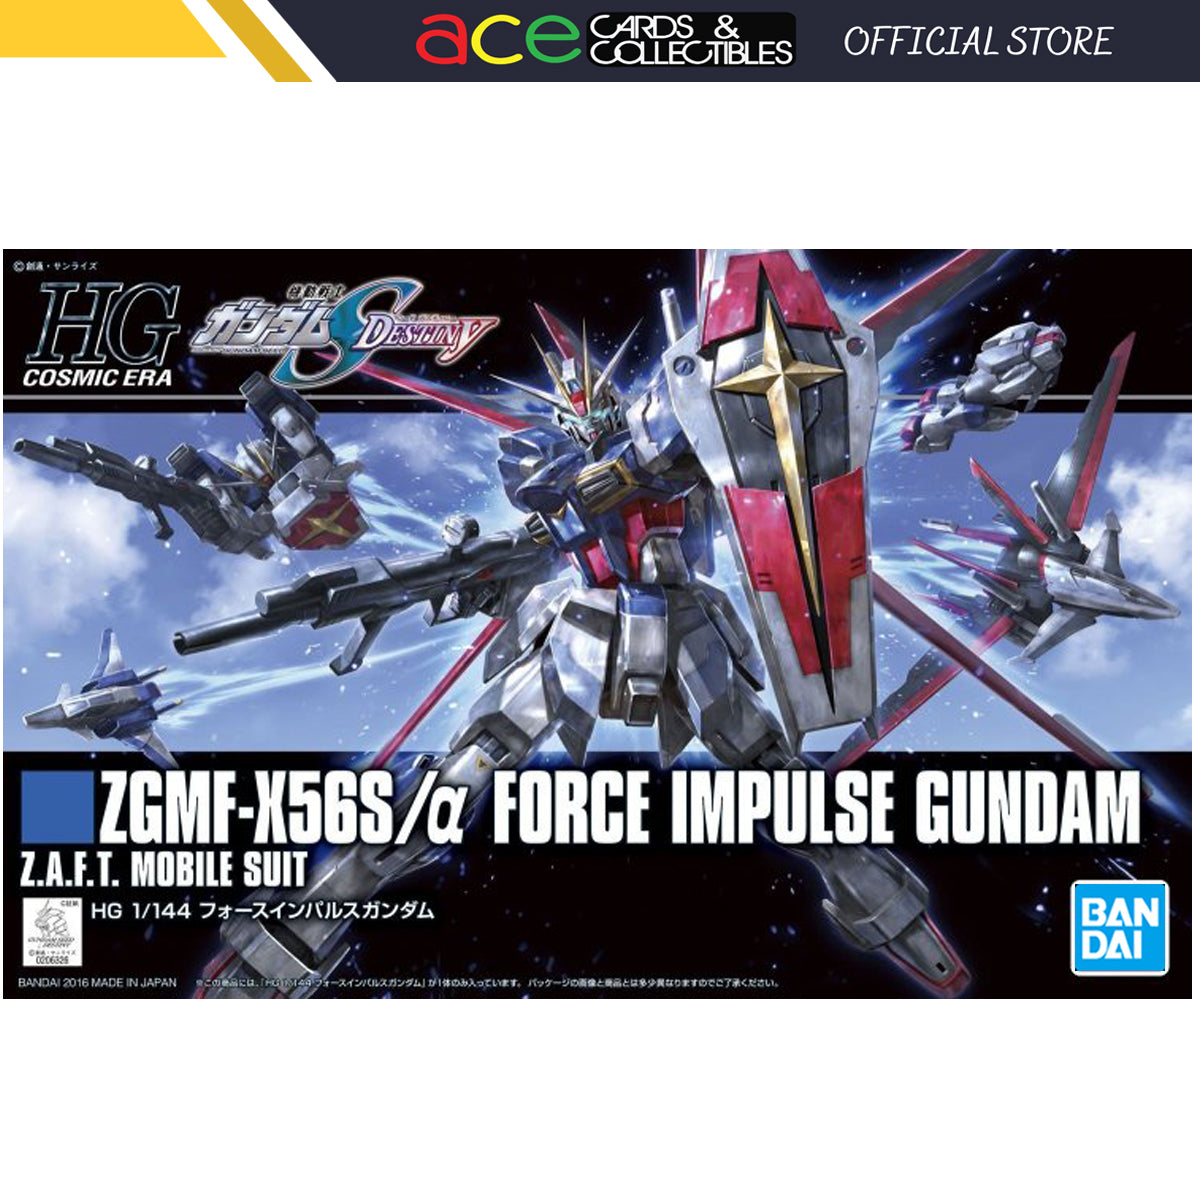 Gunpla HGCE 1/144 ZGMF-X56S/a Force Impulse Seed Gundam-Bandai-Ace Cards & Collectibles